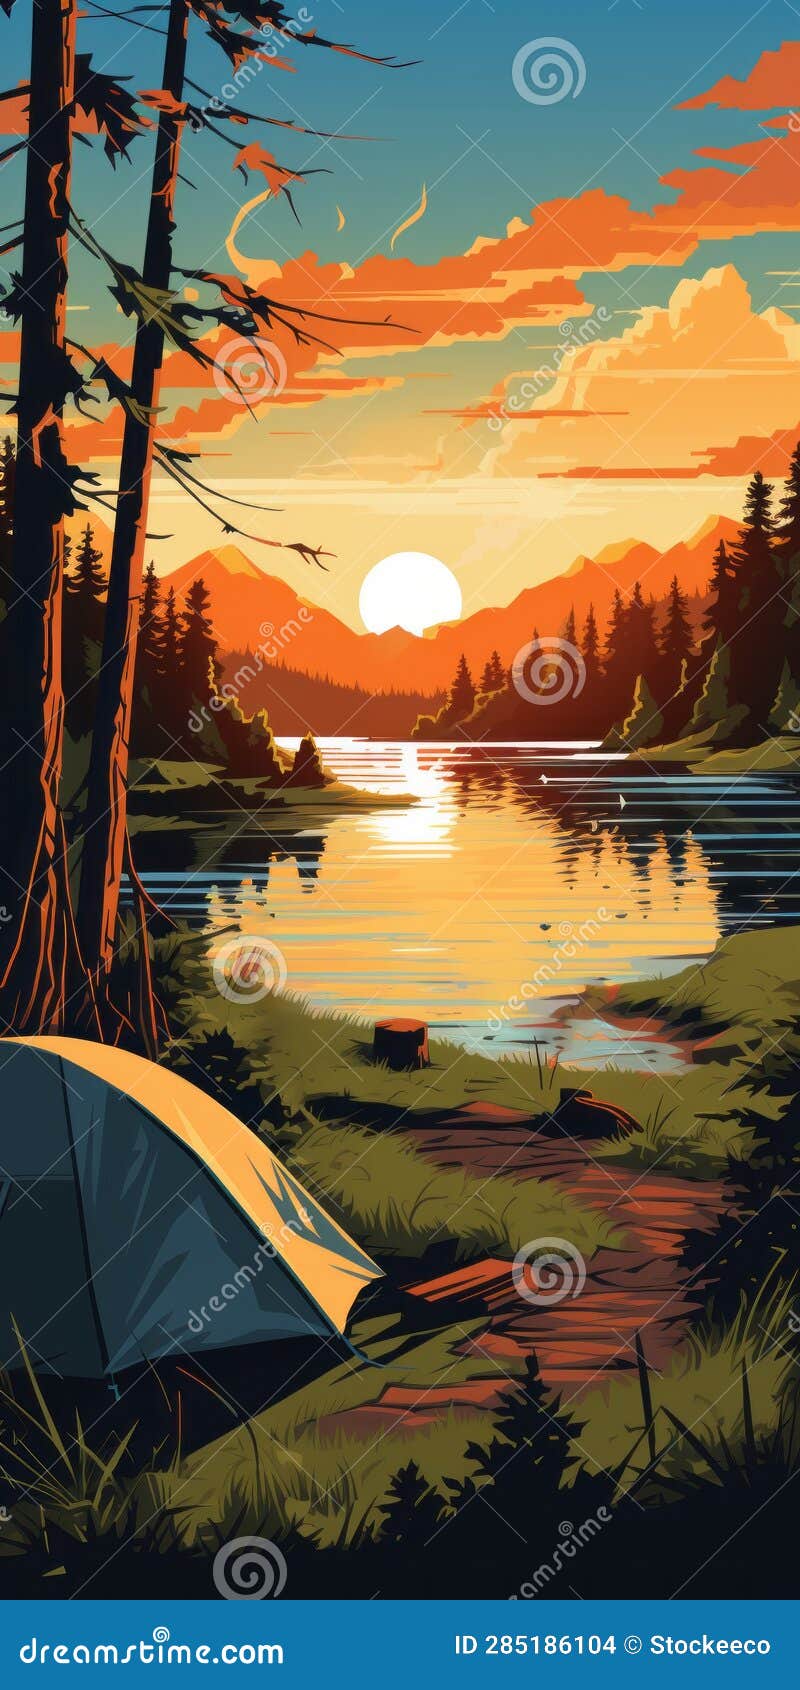 retrovirus camping poster with scenic marsh view